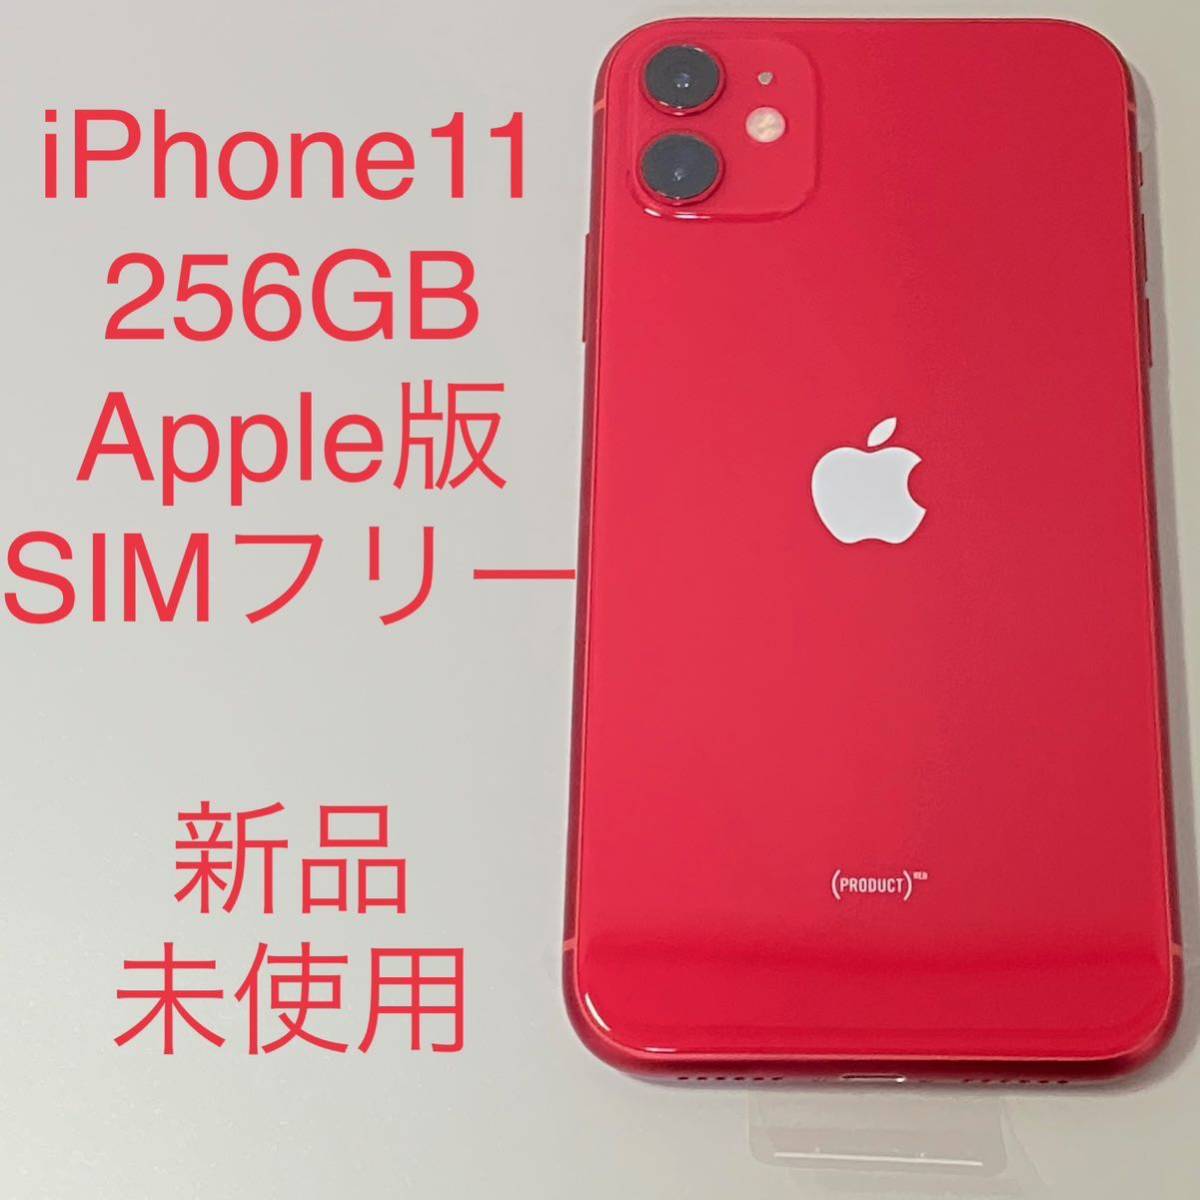 iPhone 11 256GB Apple版 SIMフリー 新品 未使用 赤 プロダクト レッド PRODUCT RED